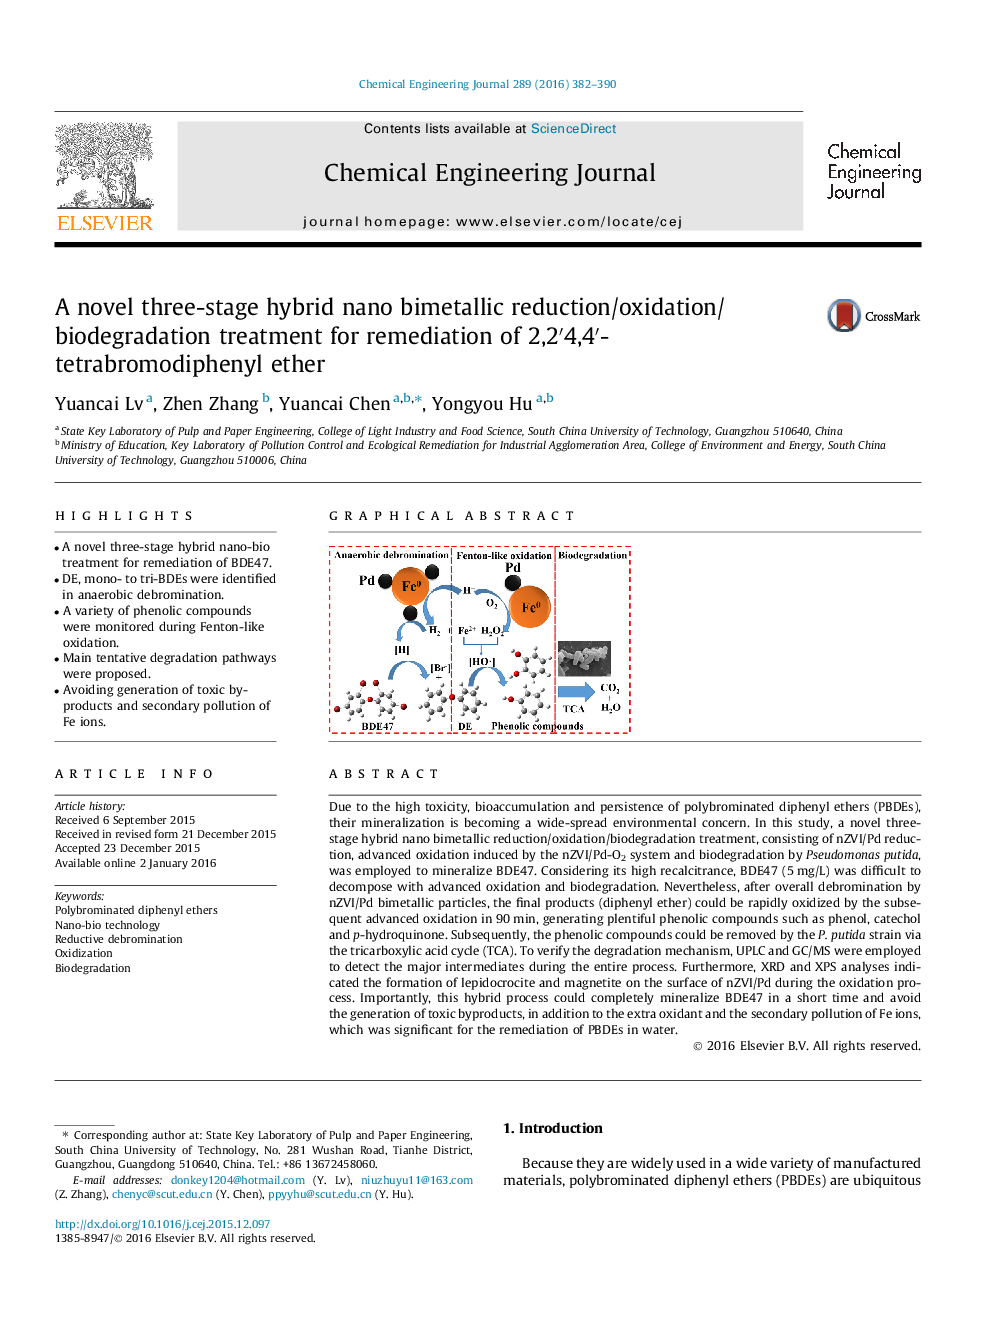 A novel three-stage hybrid nano bimetallic reduction/oxidation/biodegradation treatment for remediation of 2,2′4,4′-tetrabromodiphenyl ether